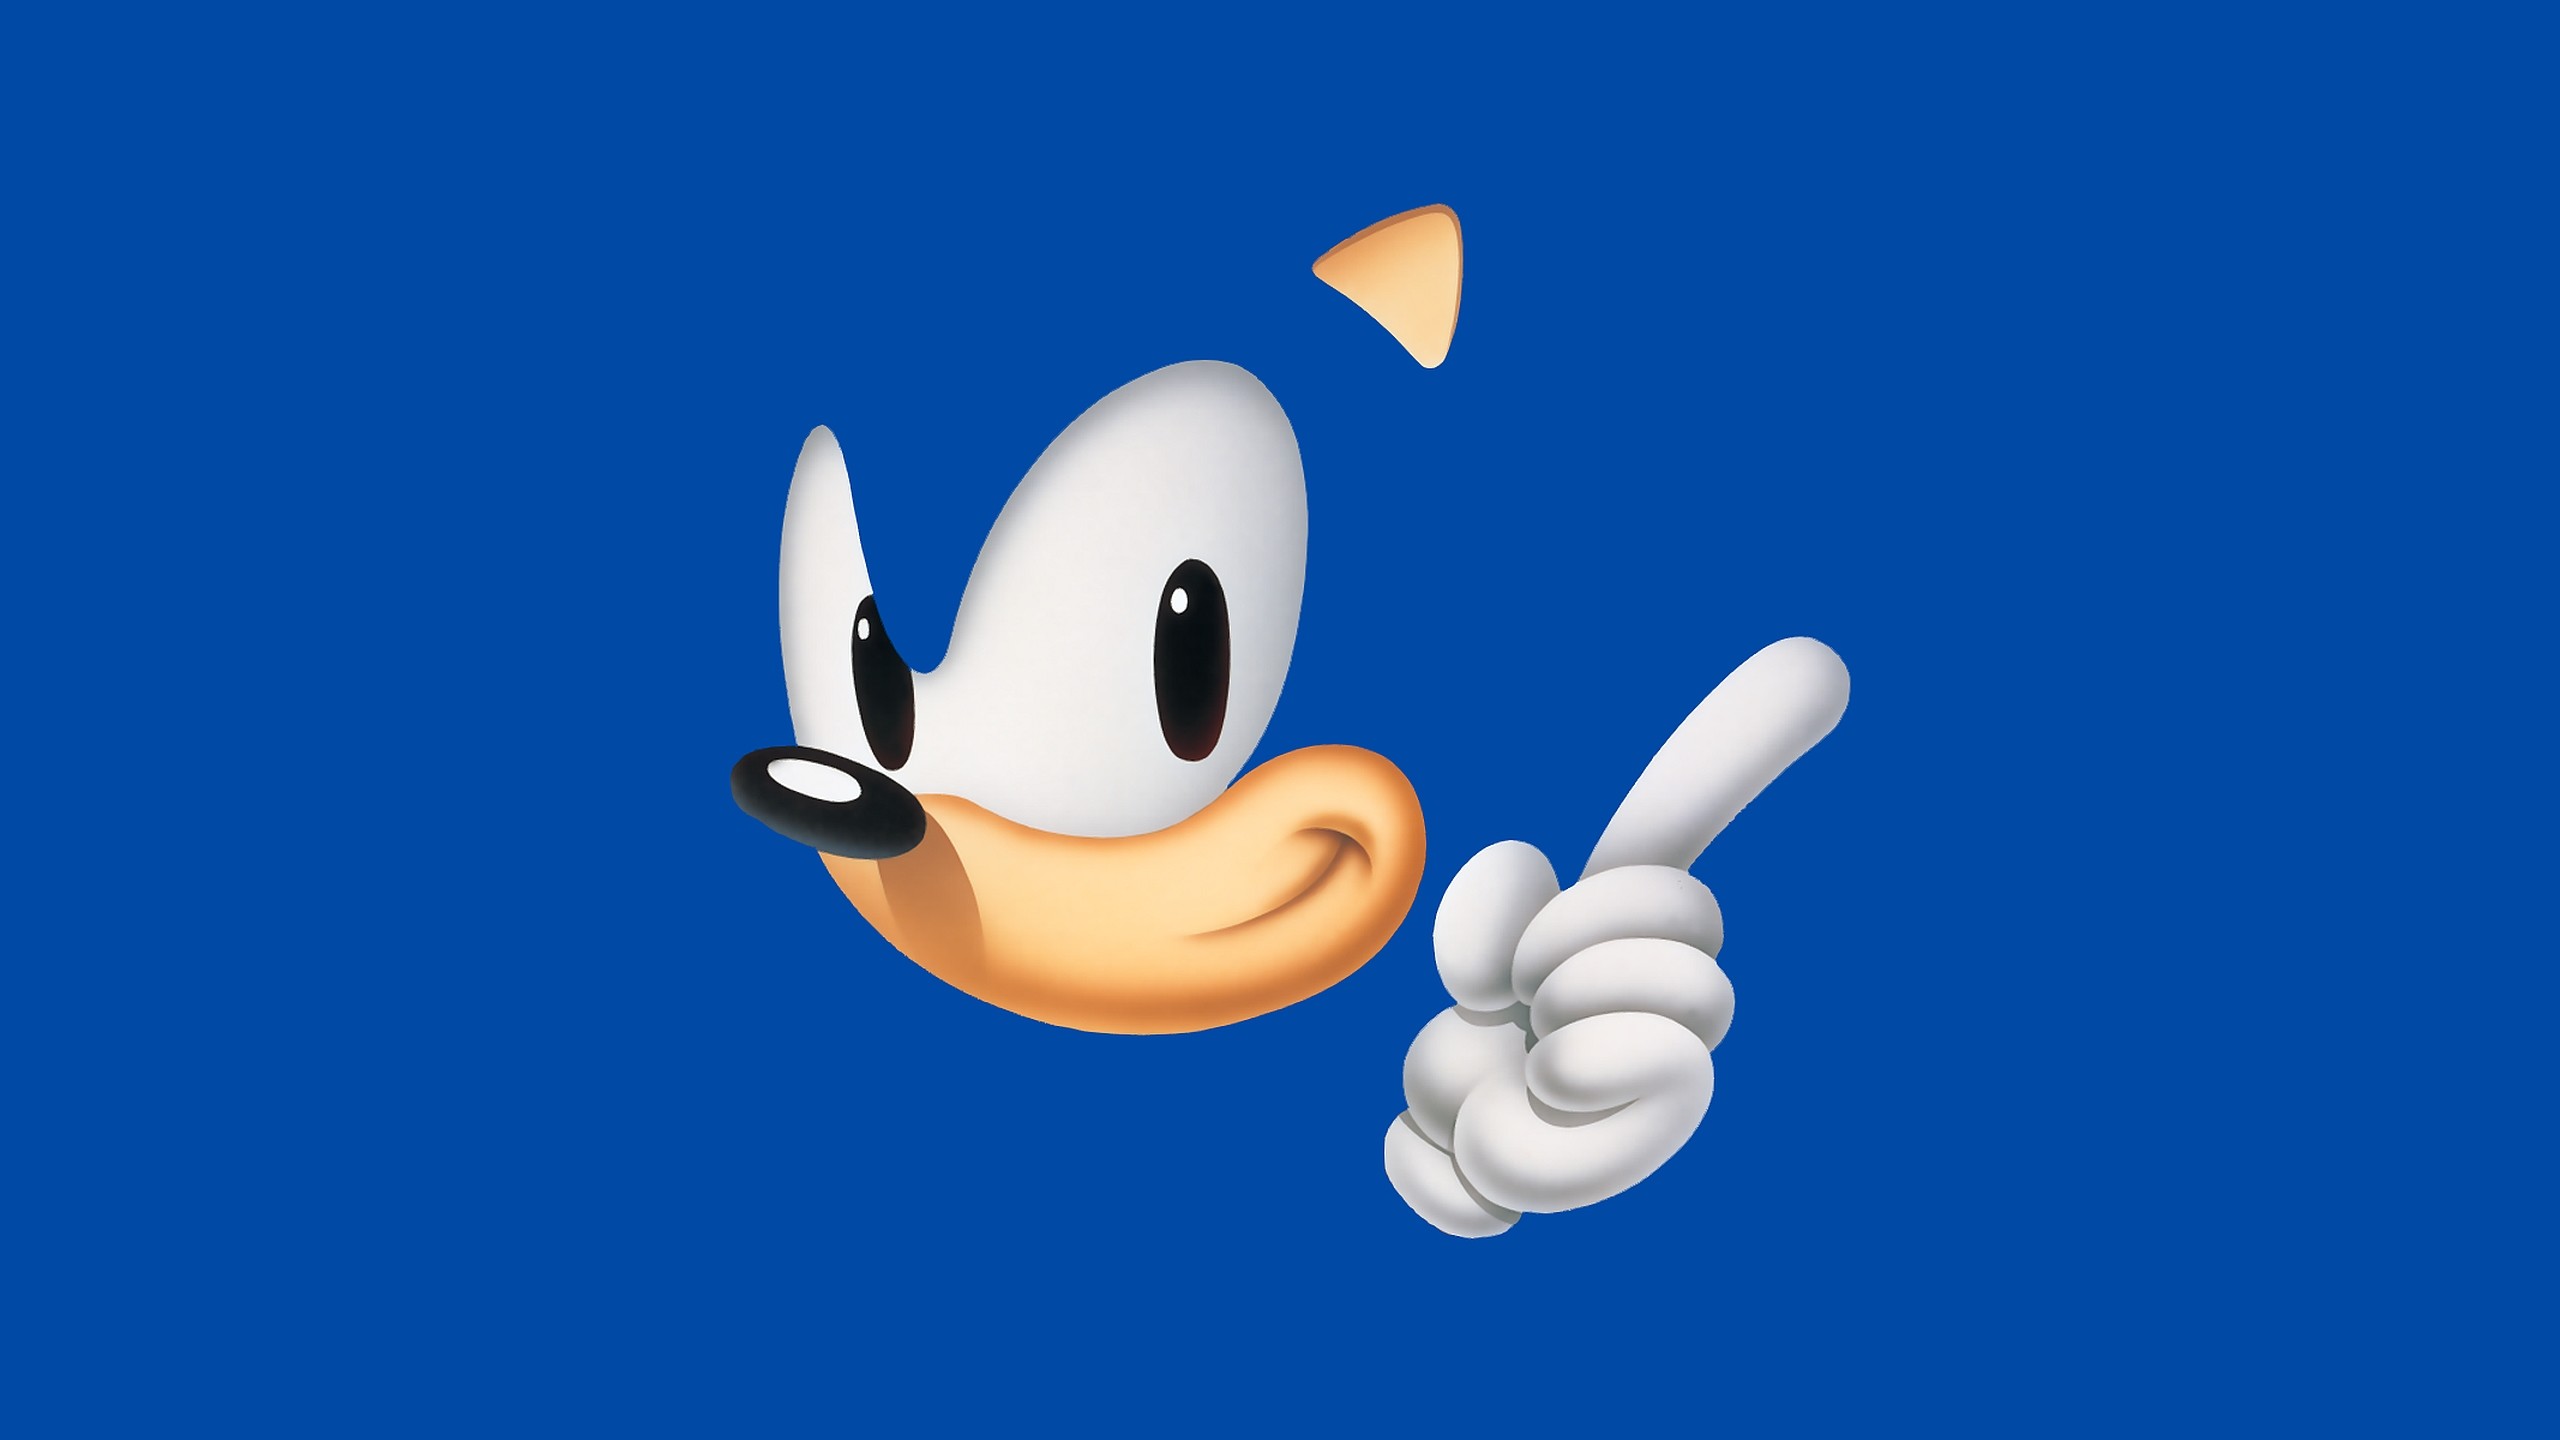 Sonic the Hedgehog HD Wallpaper Background ID336639